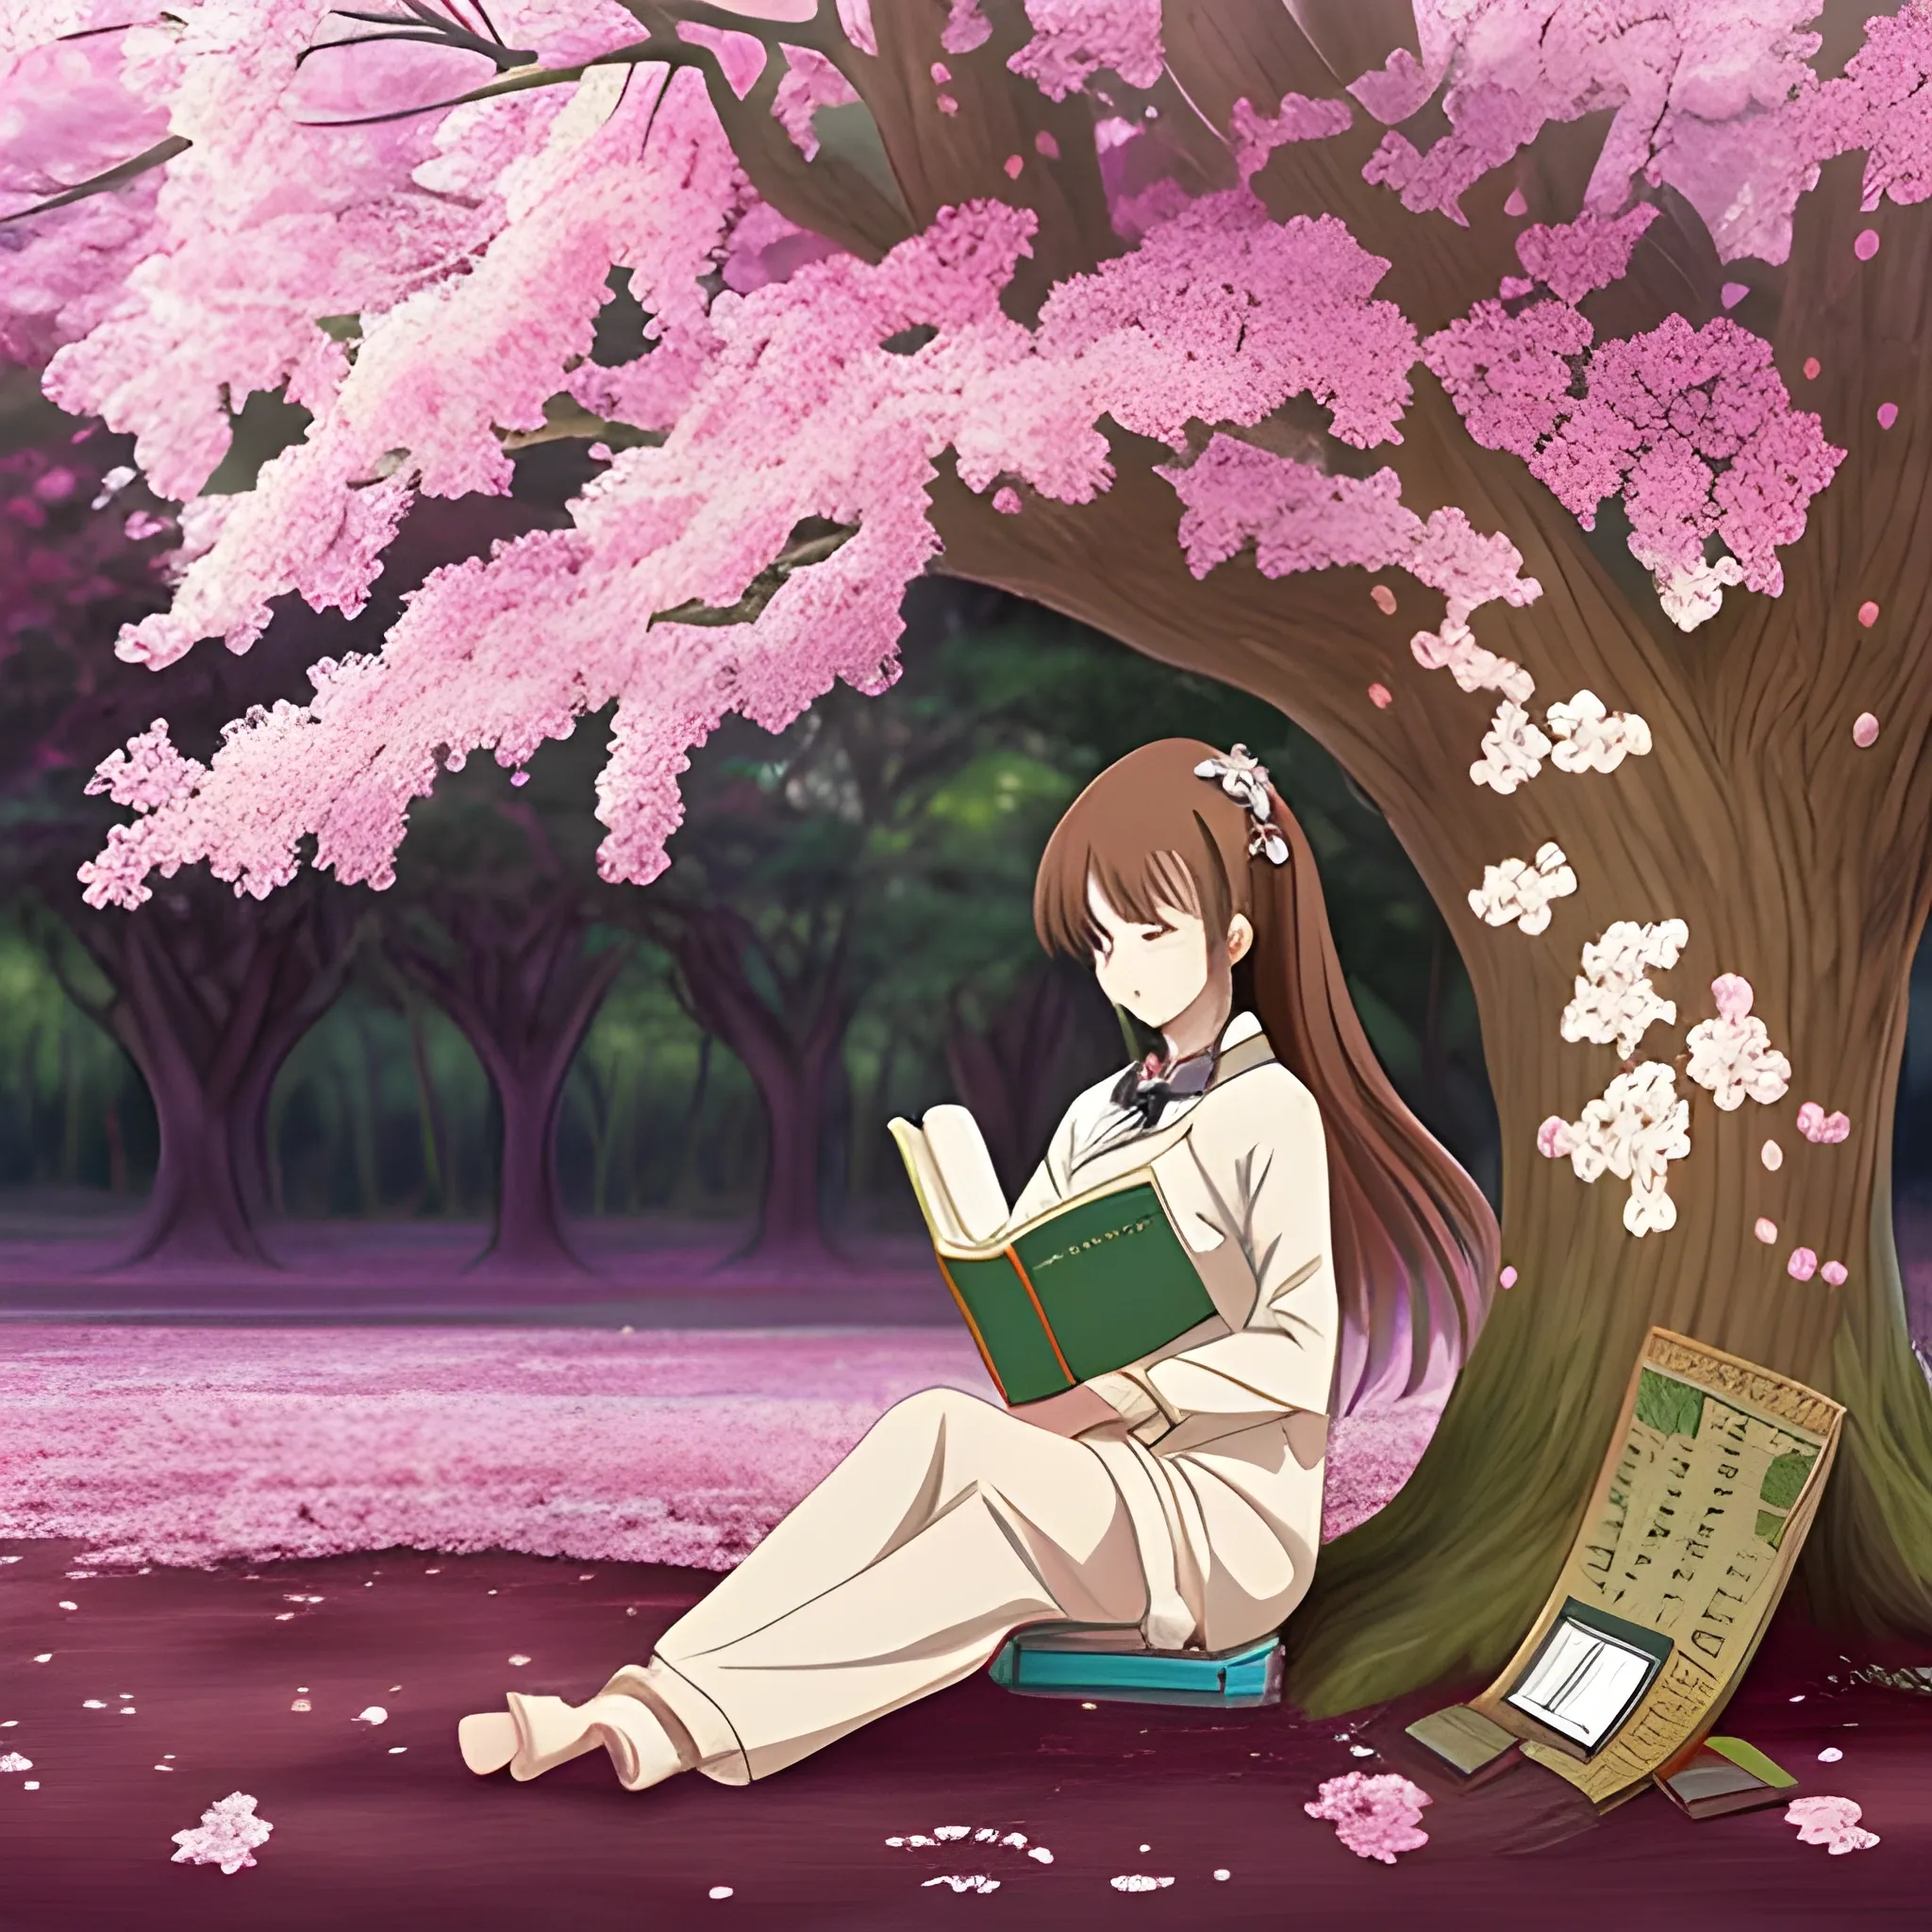 Wallpaper ID 127817  long hair skirt cherry blossom trees drawing  artwork anime girls free download